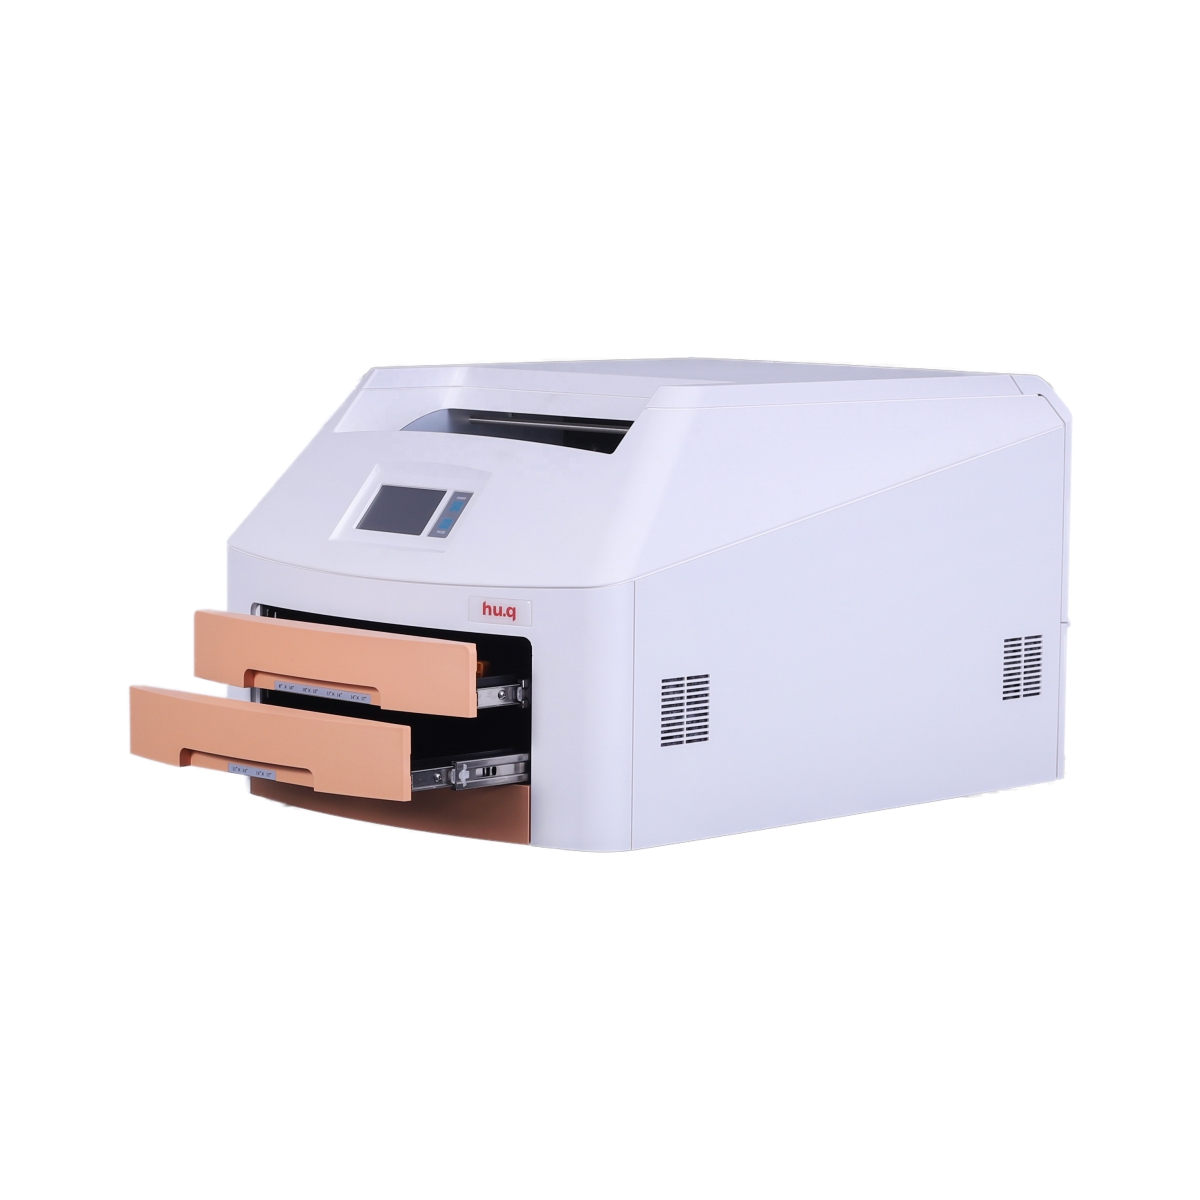 HU.Q hq-760dy Dry Image X-Ray Film Printer (Mammo)